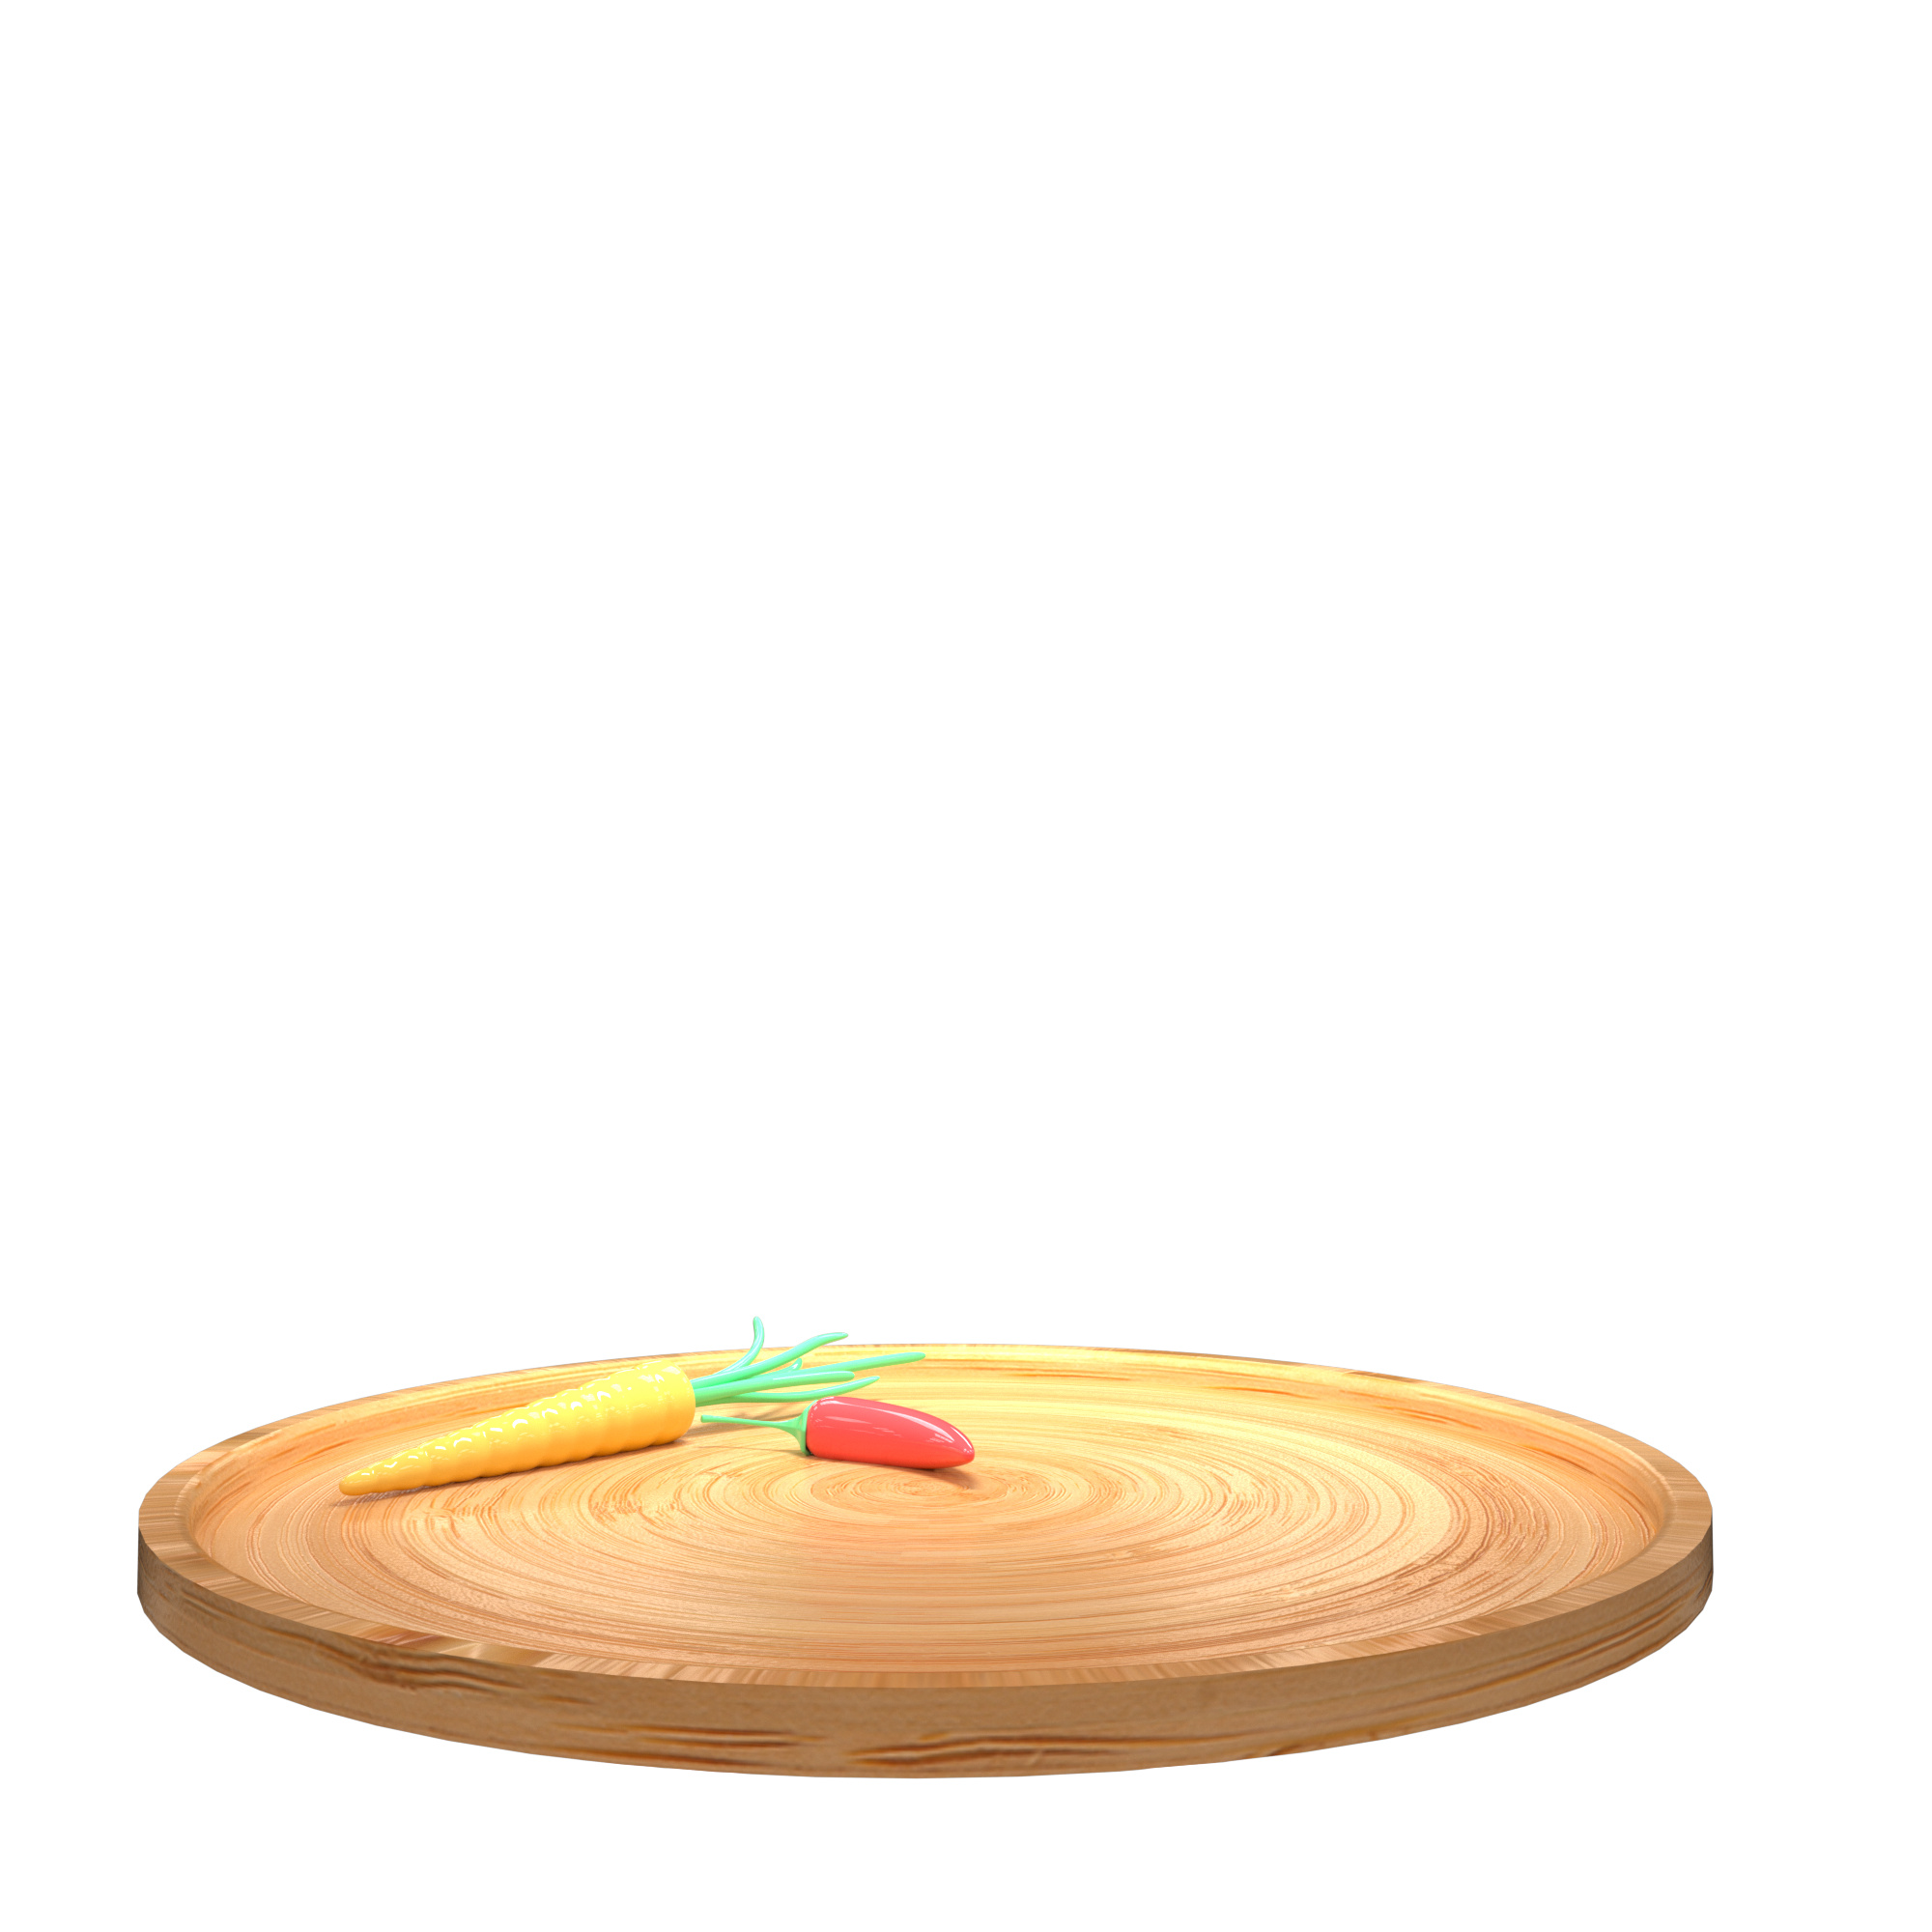 3D圆形木质菜板图片